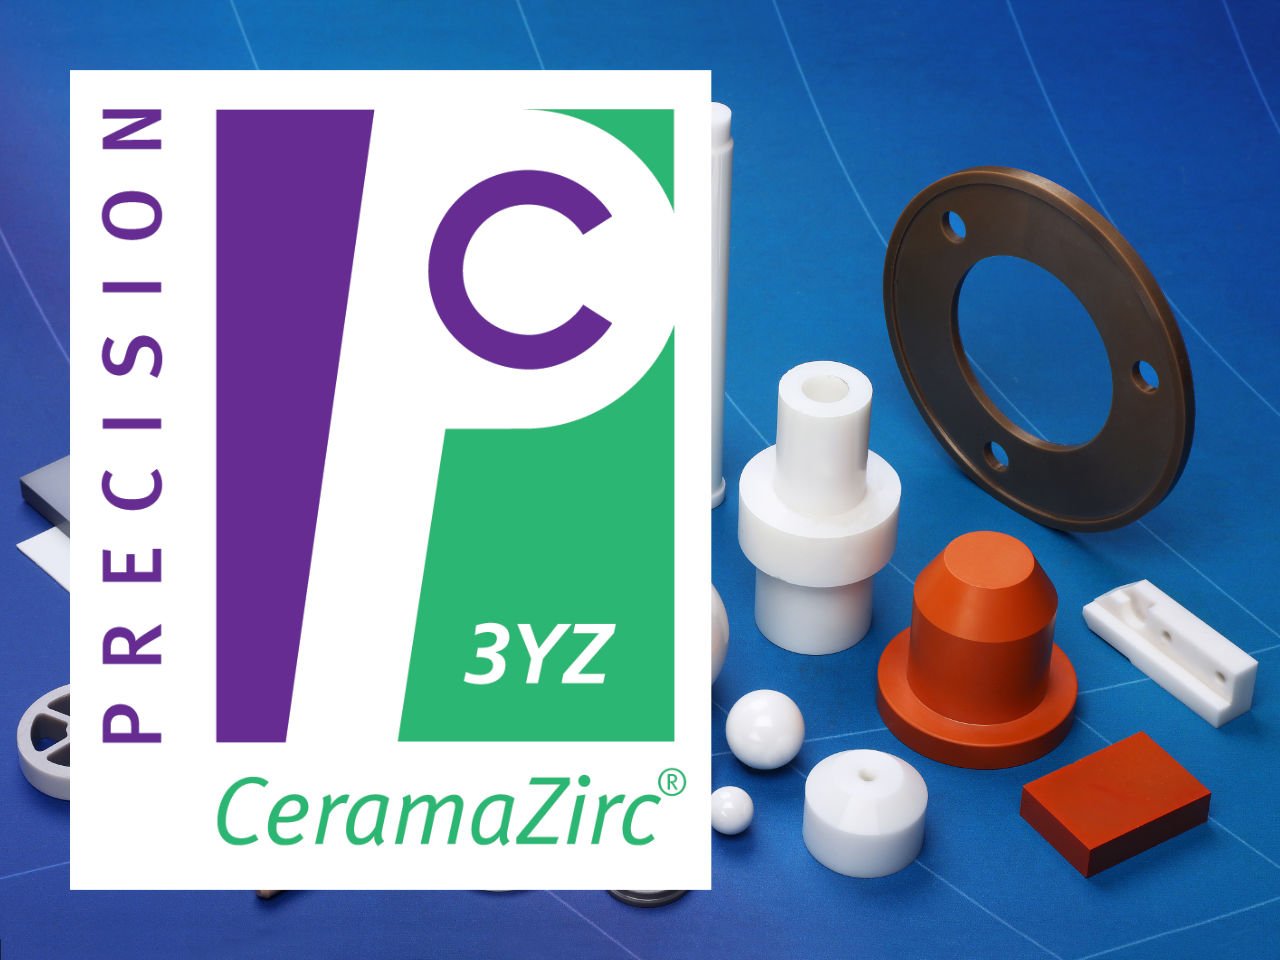 Silicon Nitride CeramaSil-C Material Brand